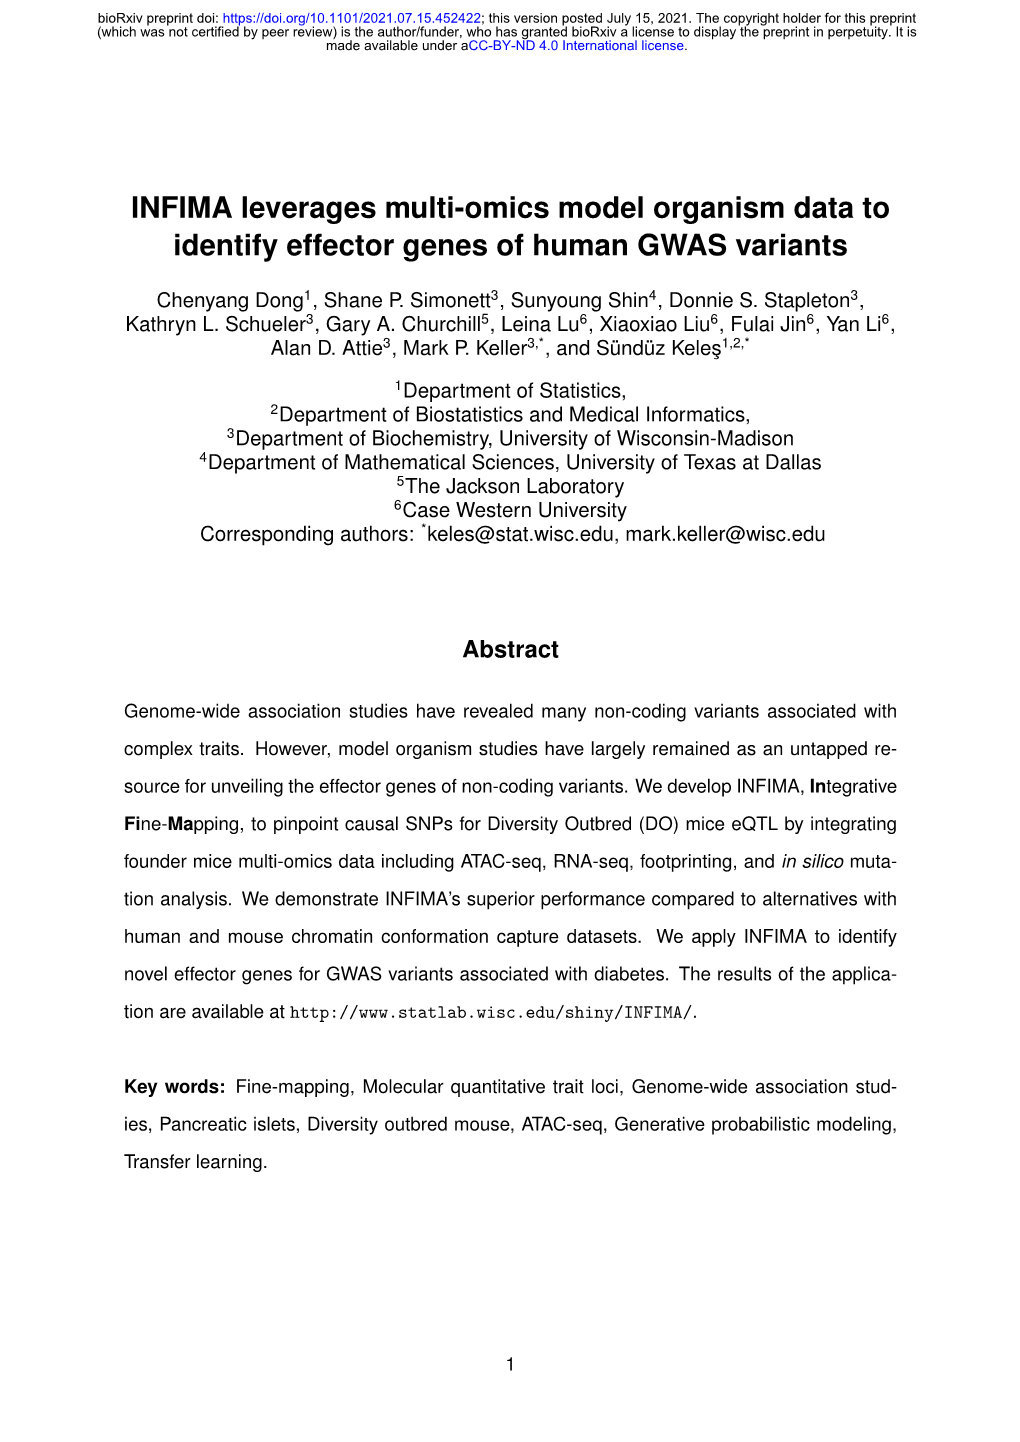 INFIMA Leverages Multi-Omics Model Organism Data to Identify Effector Genes of Human GWAS Variants